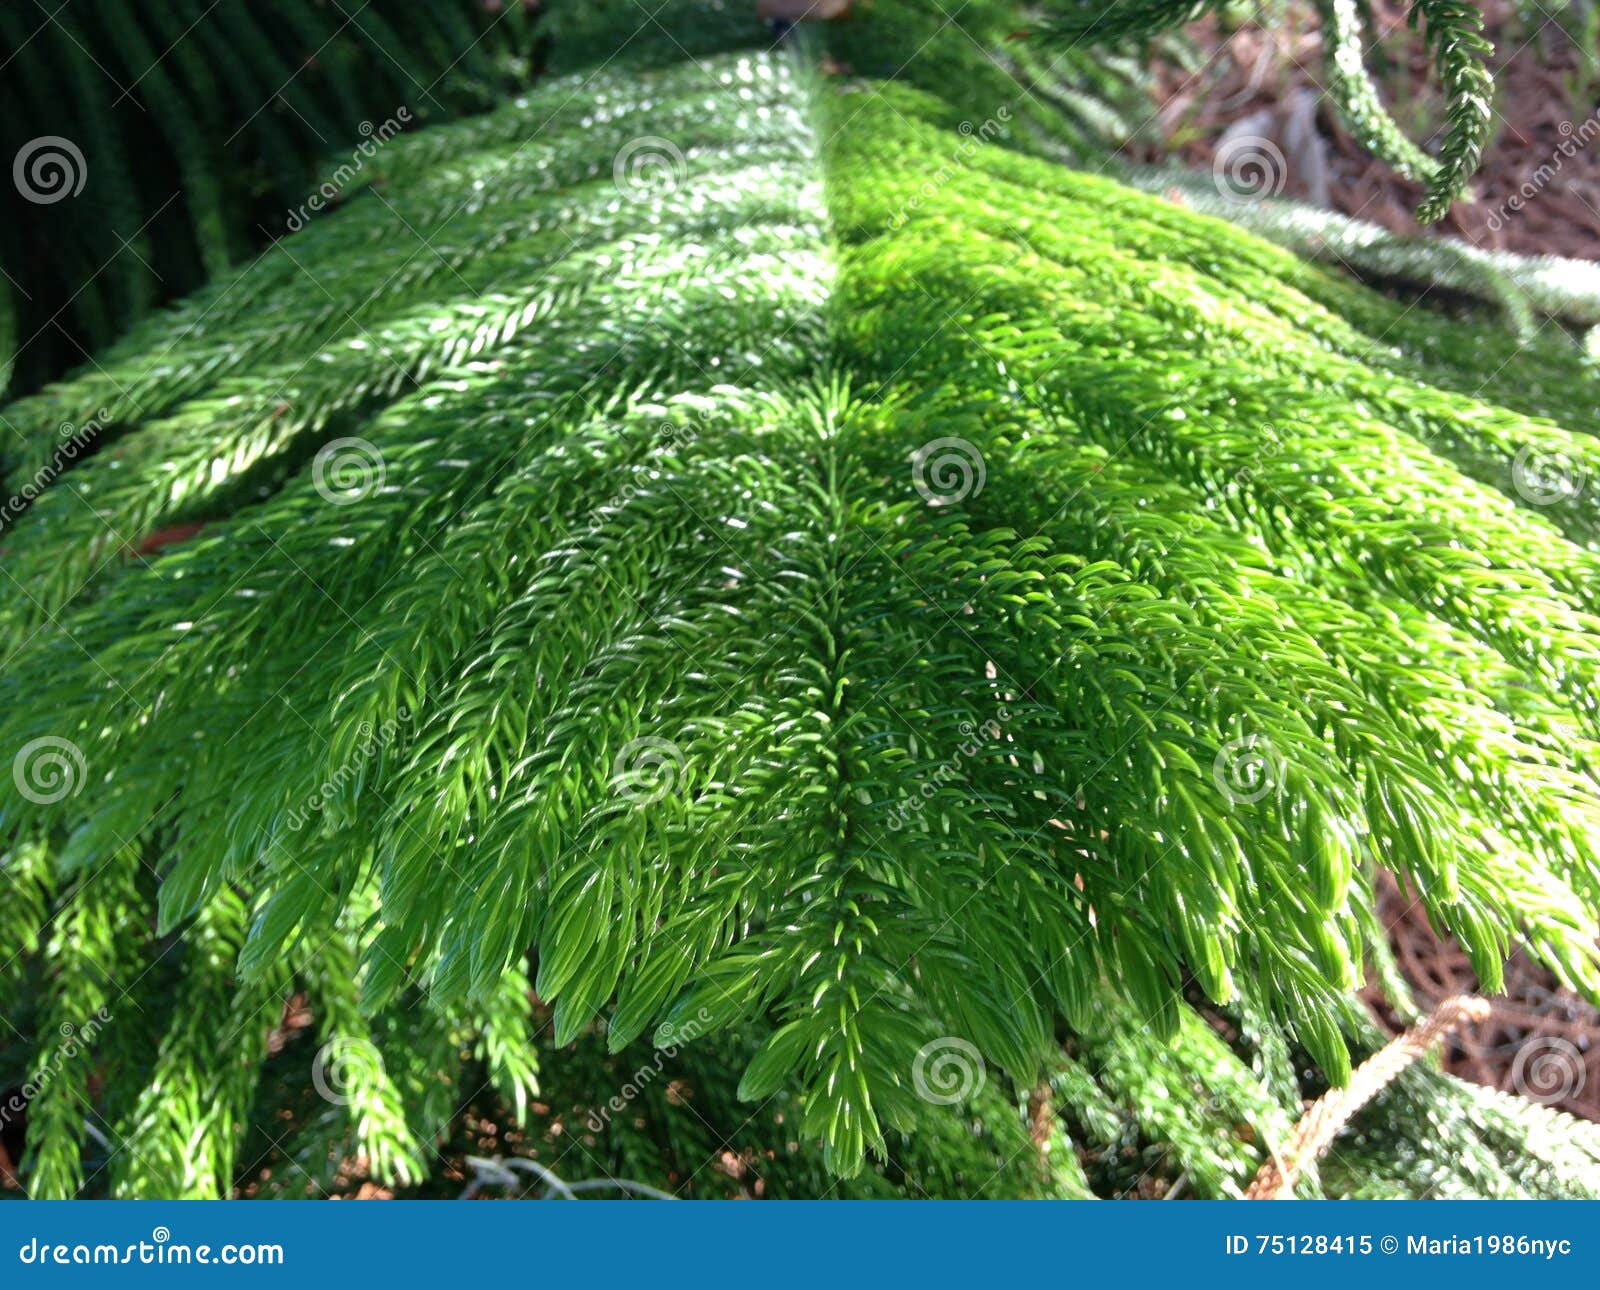 Araucaria Heterophylla Norfolk Island Pine Star Pine Triangle Tree Or Living Christmas Tree Growing In Florida Stock Image Image Of Christmas Island